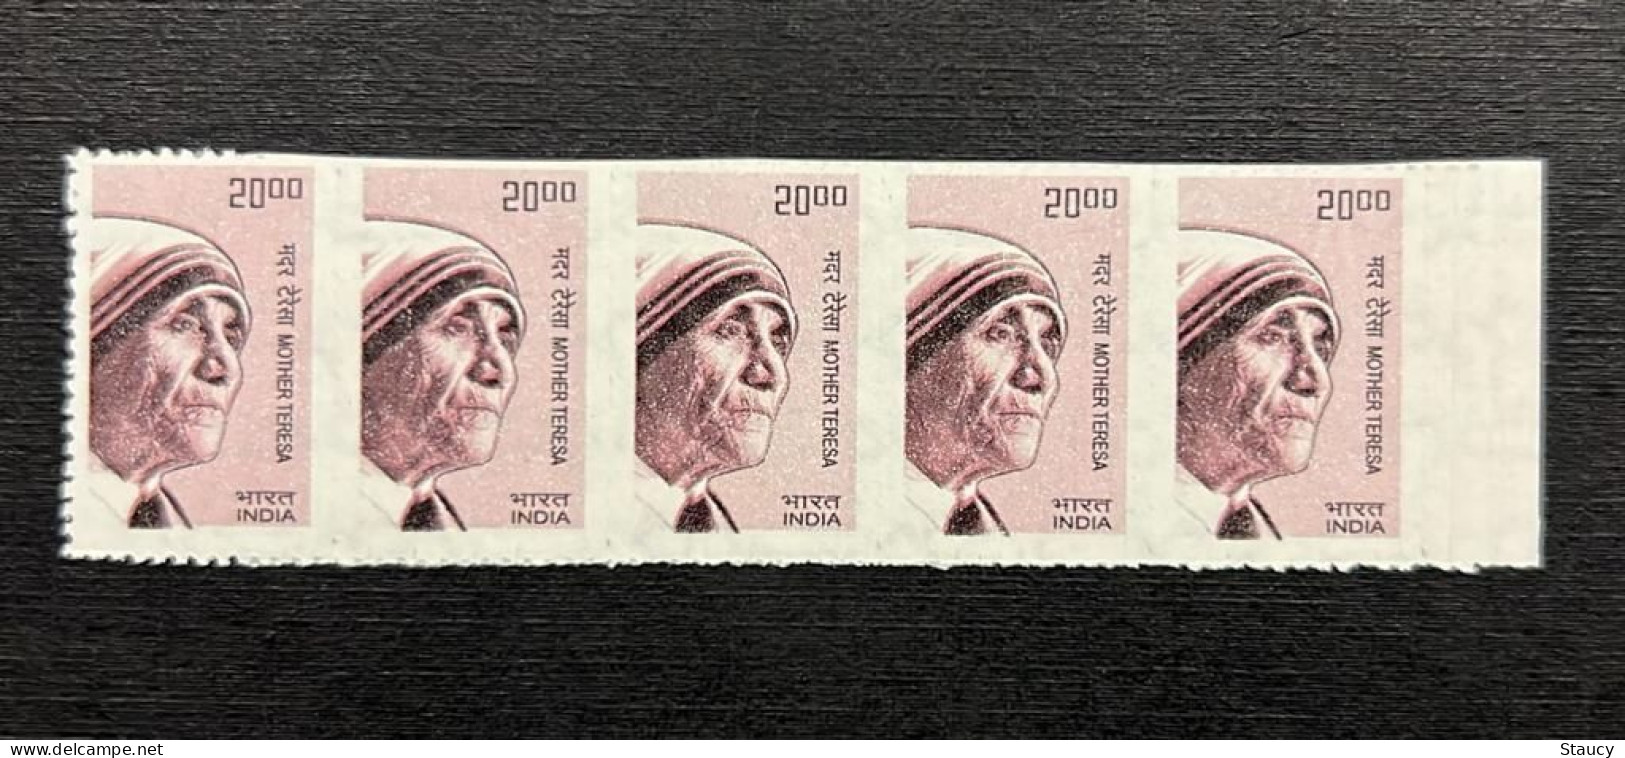 INDIA 2009 Error 10th. Definitive Series, Error "Imperf Strip Of 5 Stamps" Of "Mother Teresa" MNH As Per Scan - Varietà & Curiosità